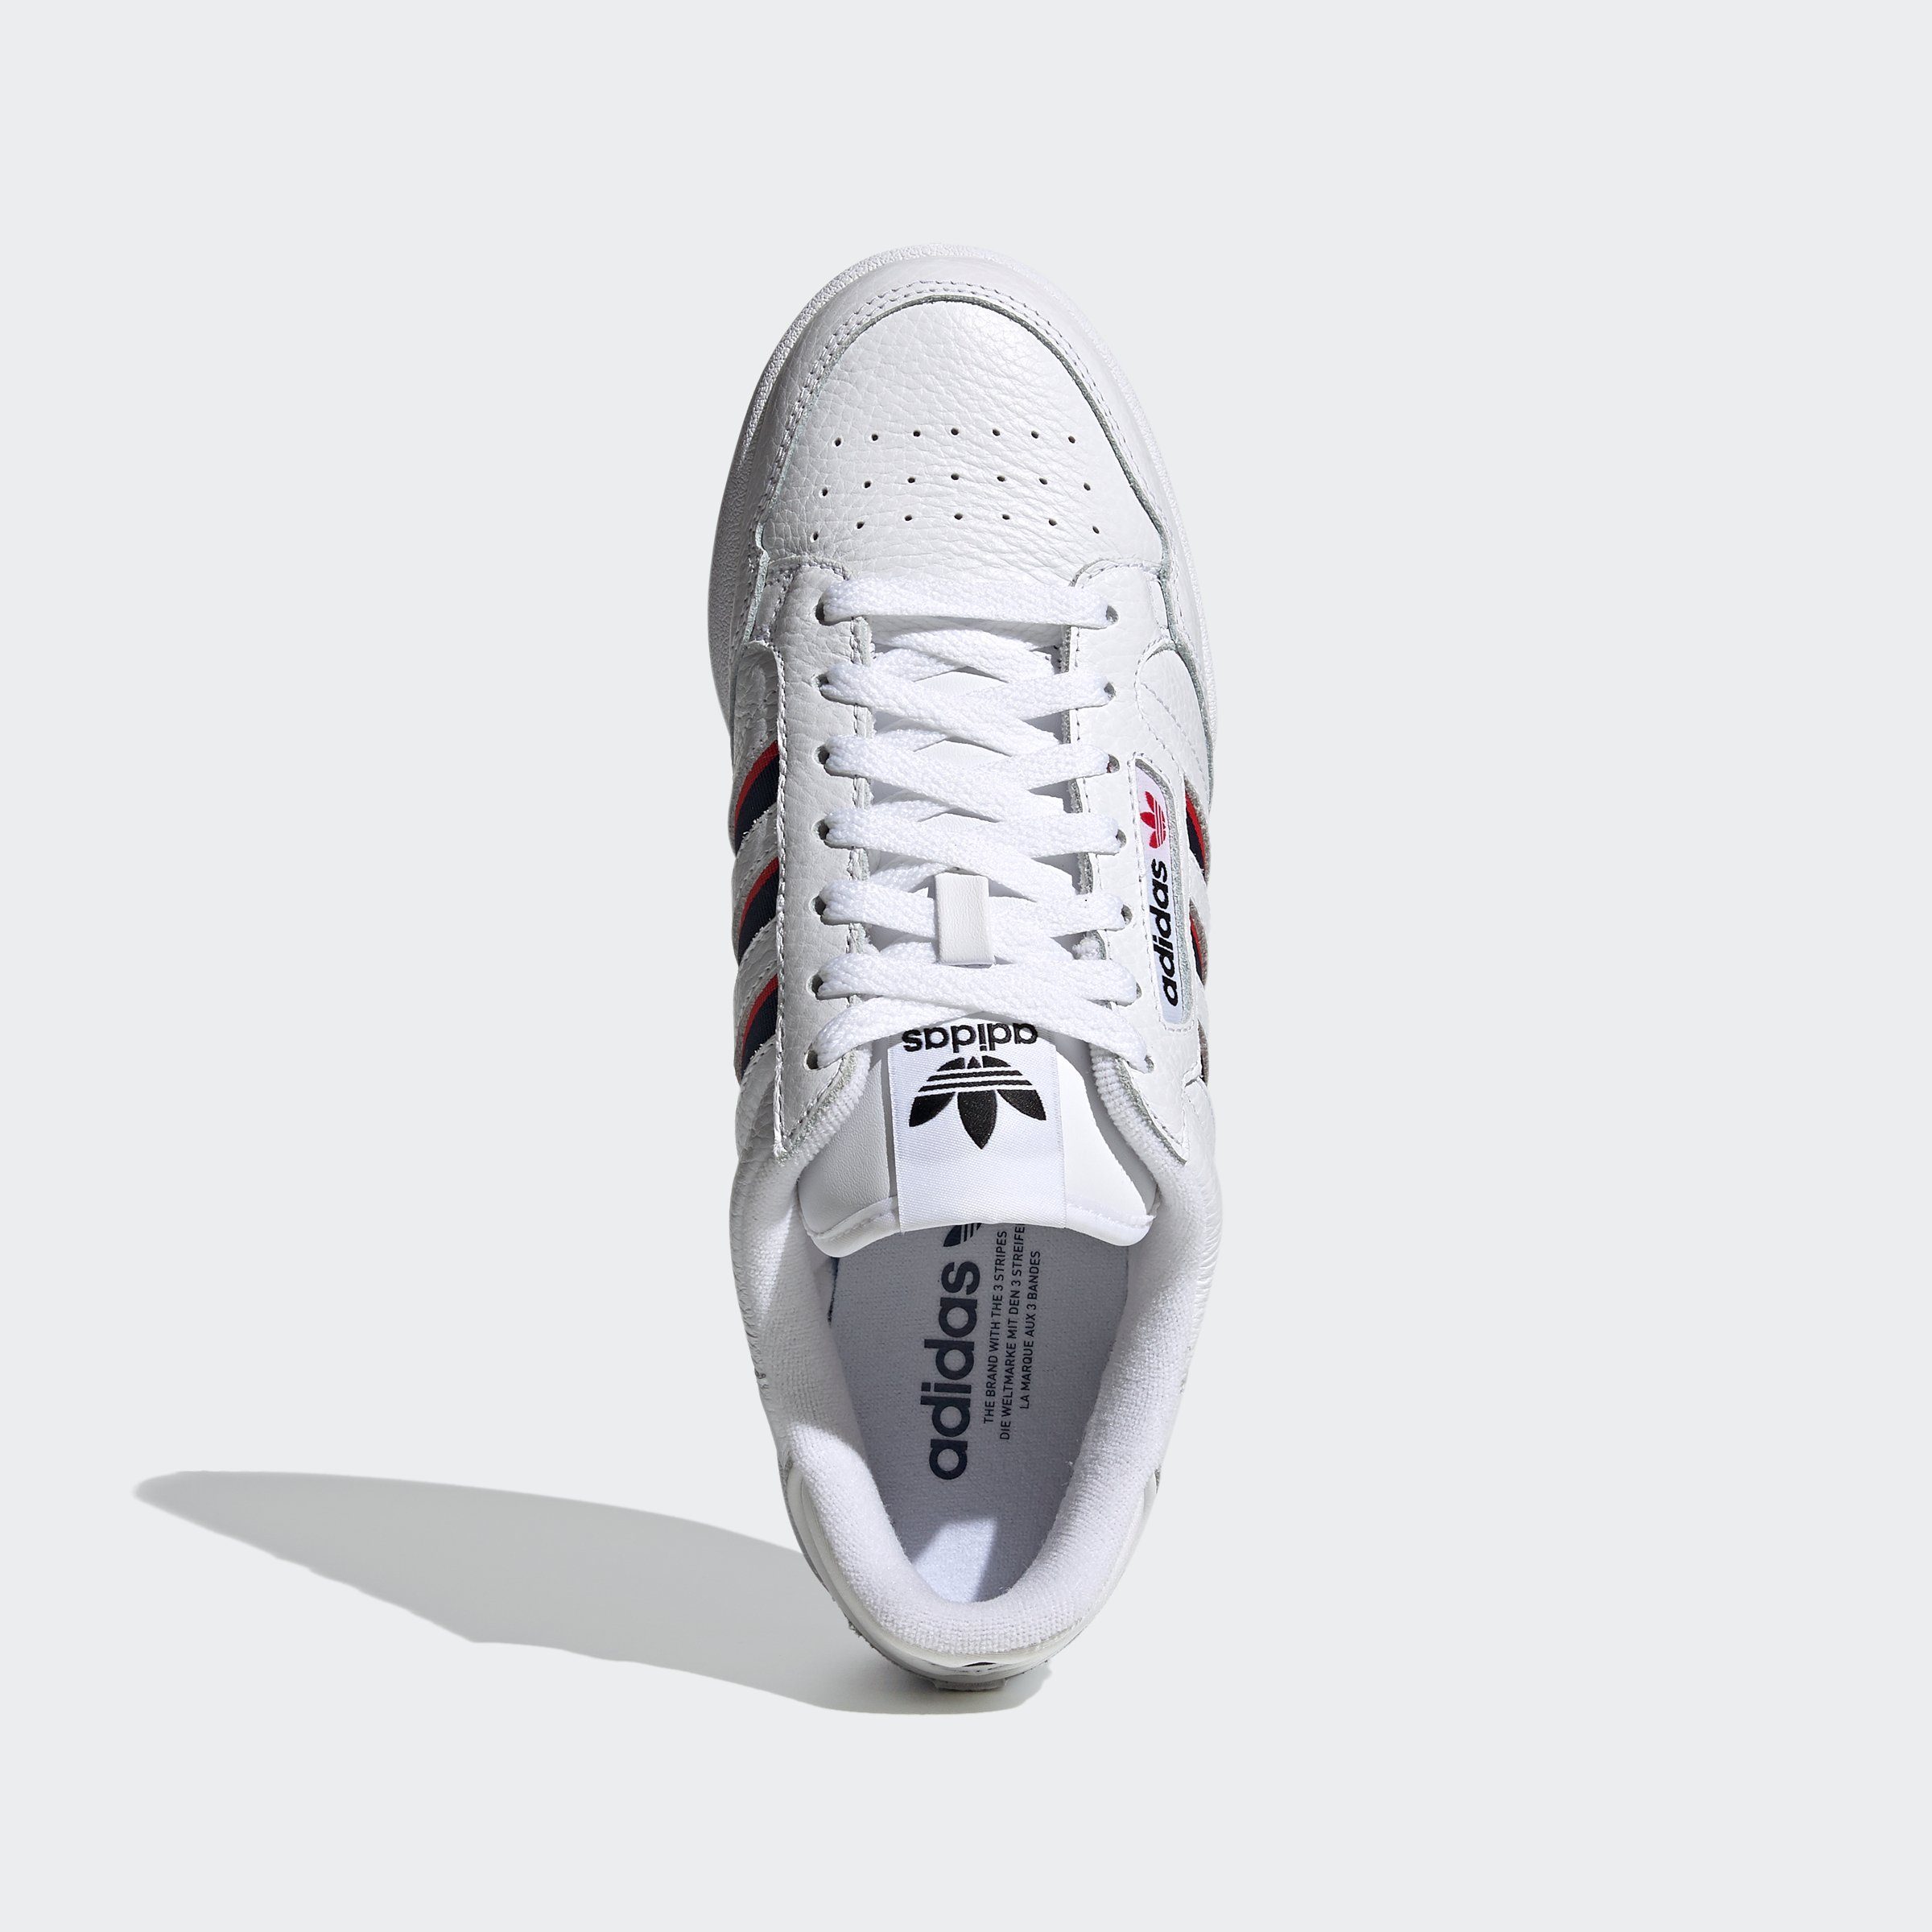 adidas Originals CONTINENTAL FTWWHT-CONAVY-VIVRED 80 STRIPES Sneaker